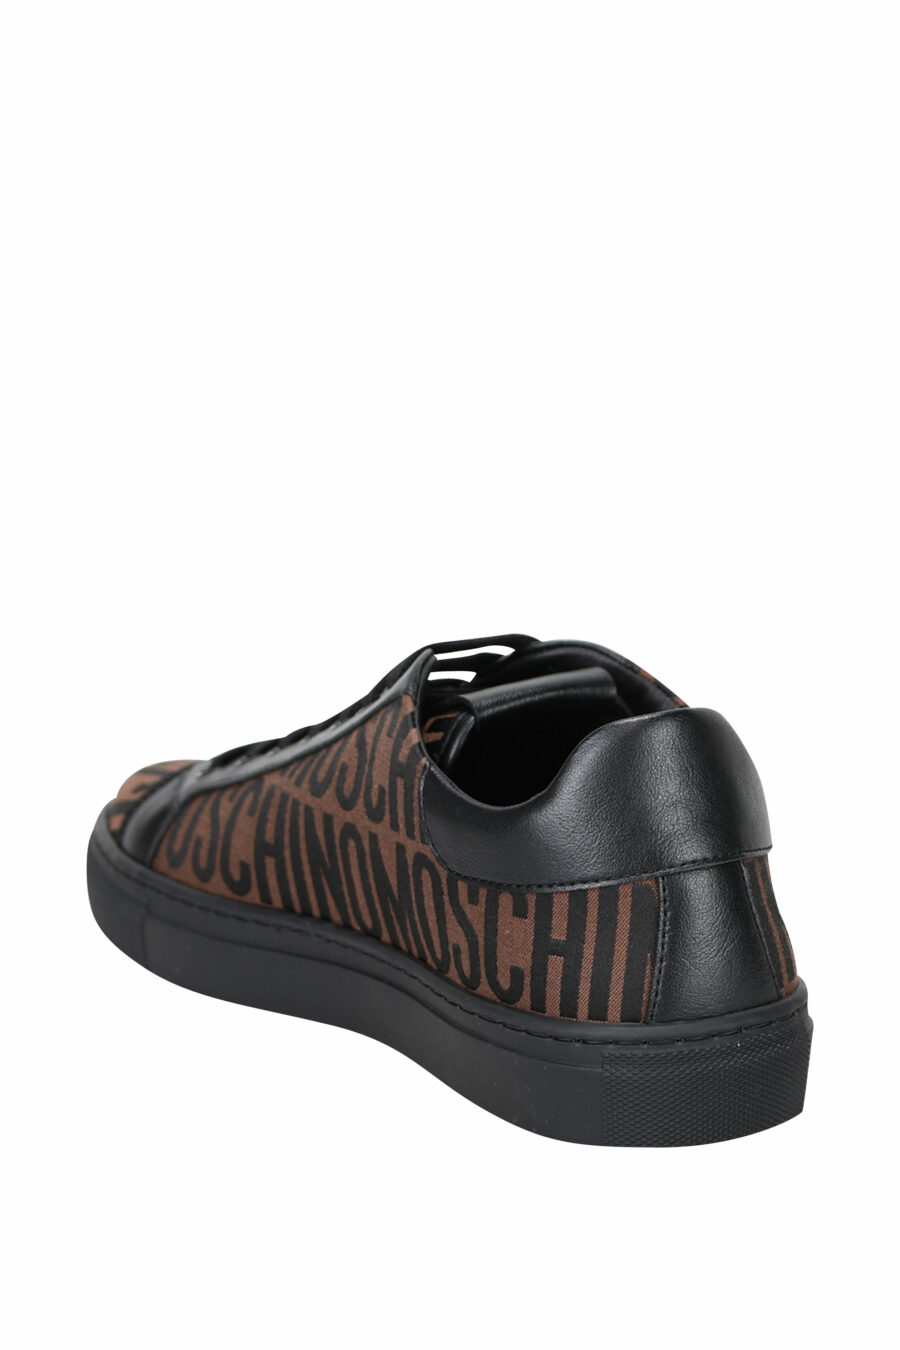 Zapatillas marrón "all over logo" con suela negra - 8054653827523 3